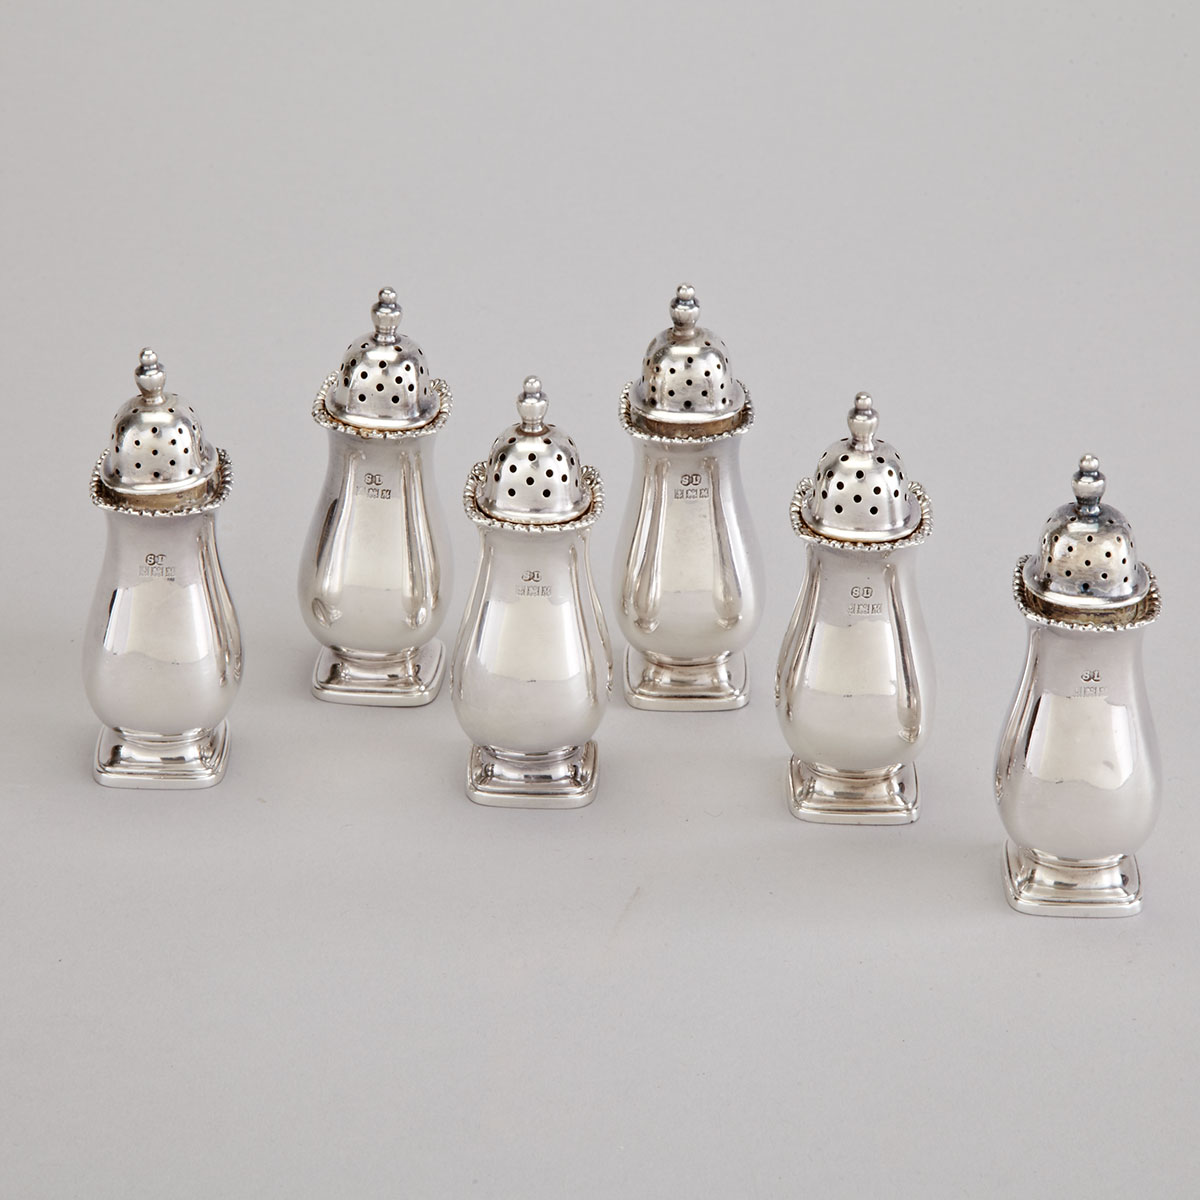 Six English Silver Salt and Pepper Shakers, William Suckling Ltd., Birmingham, 1961